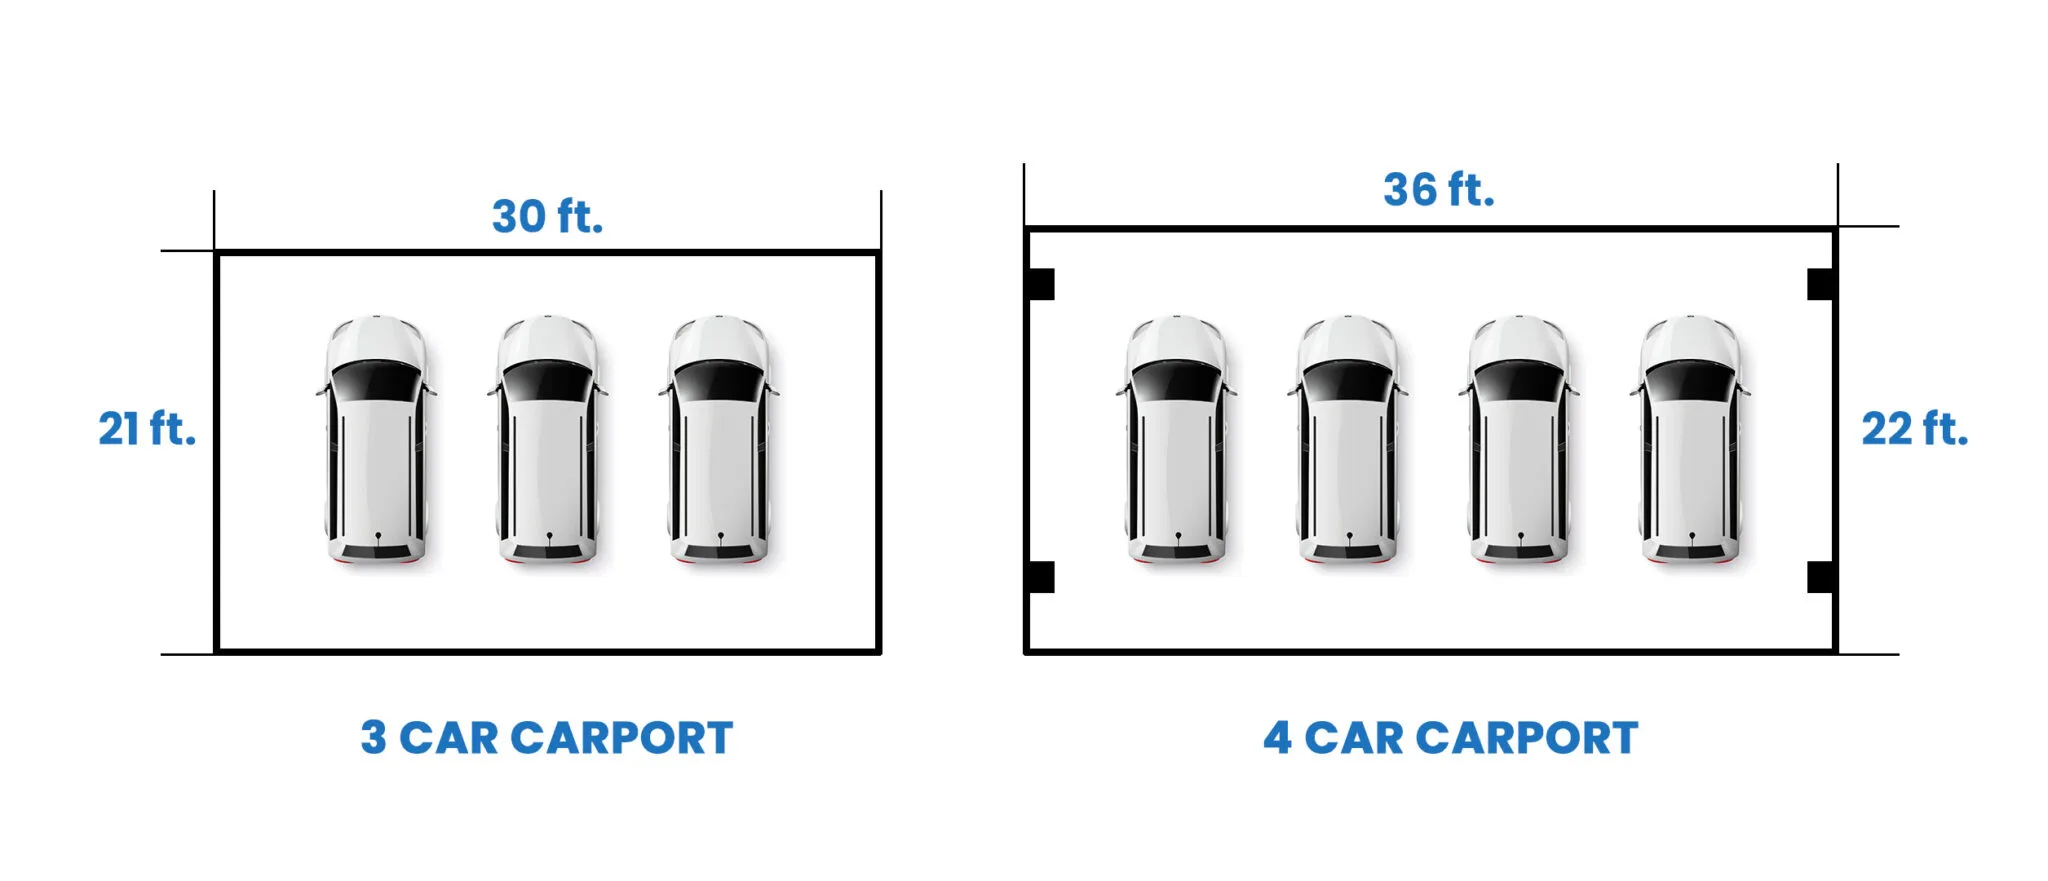 3 and 4 car carport size